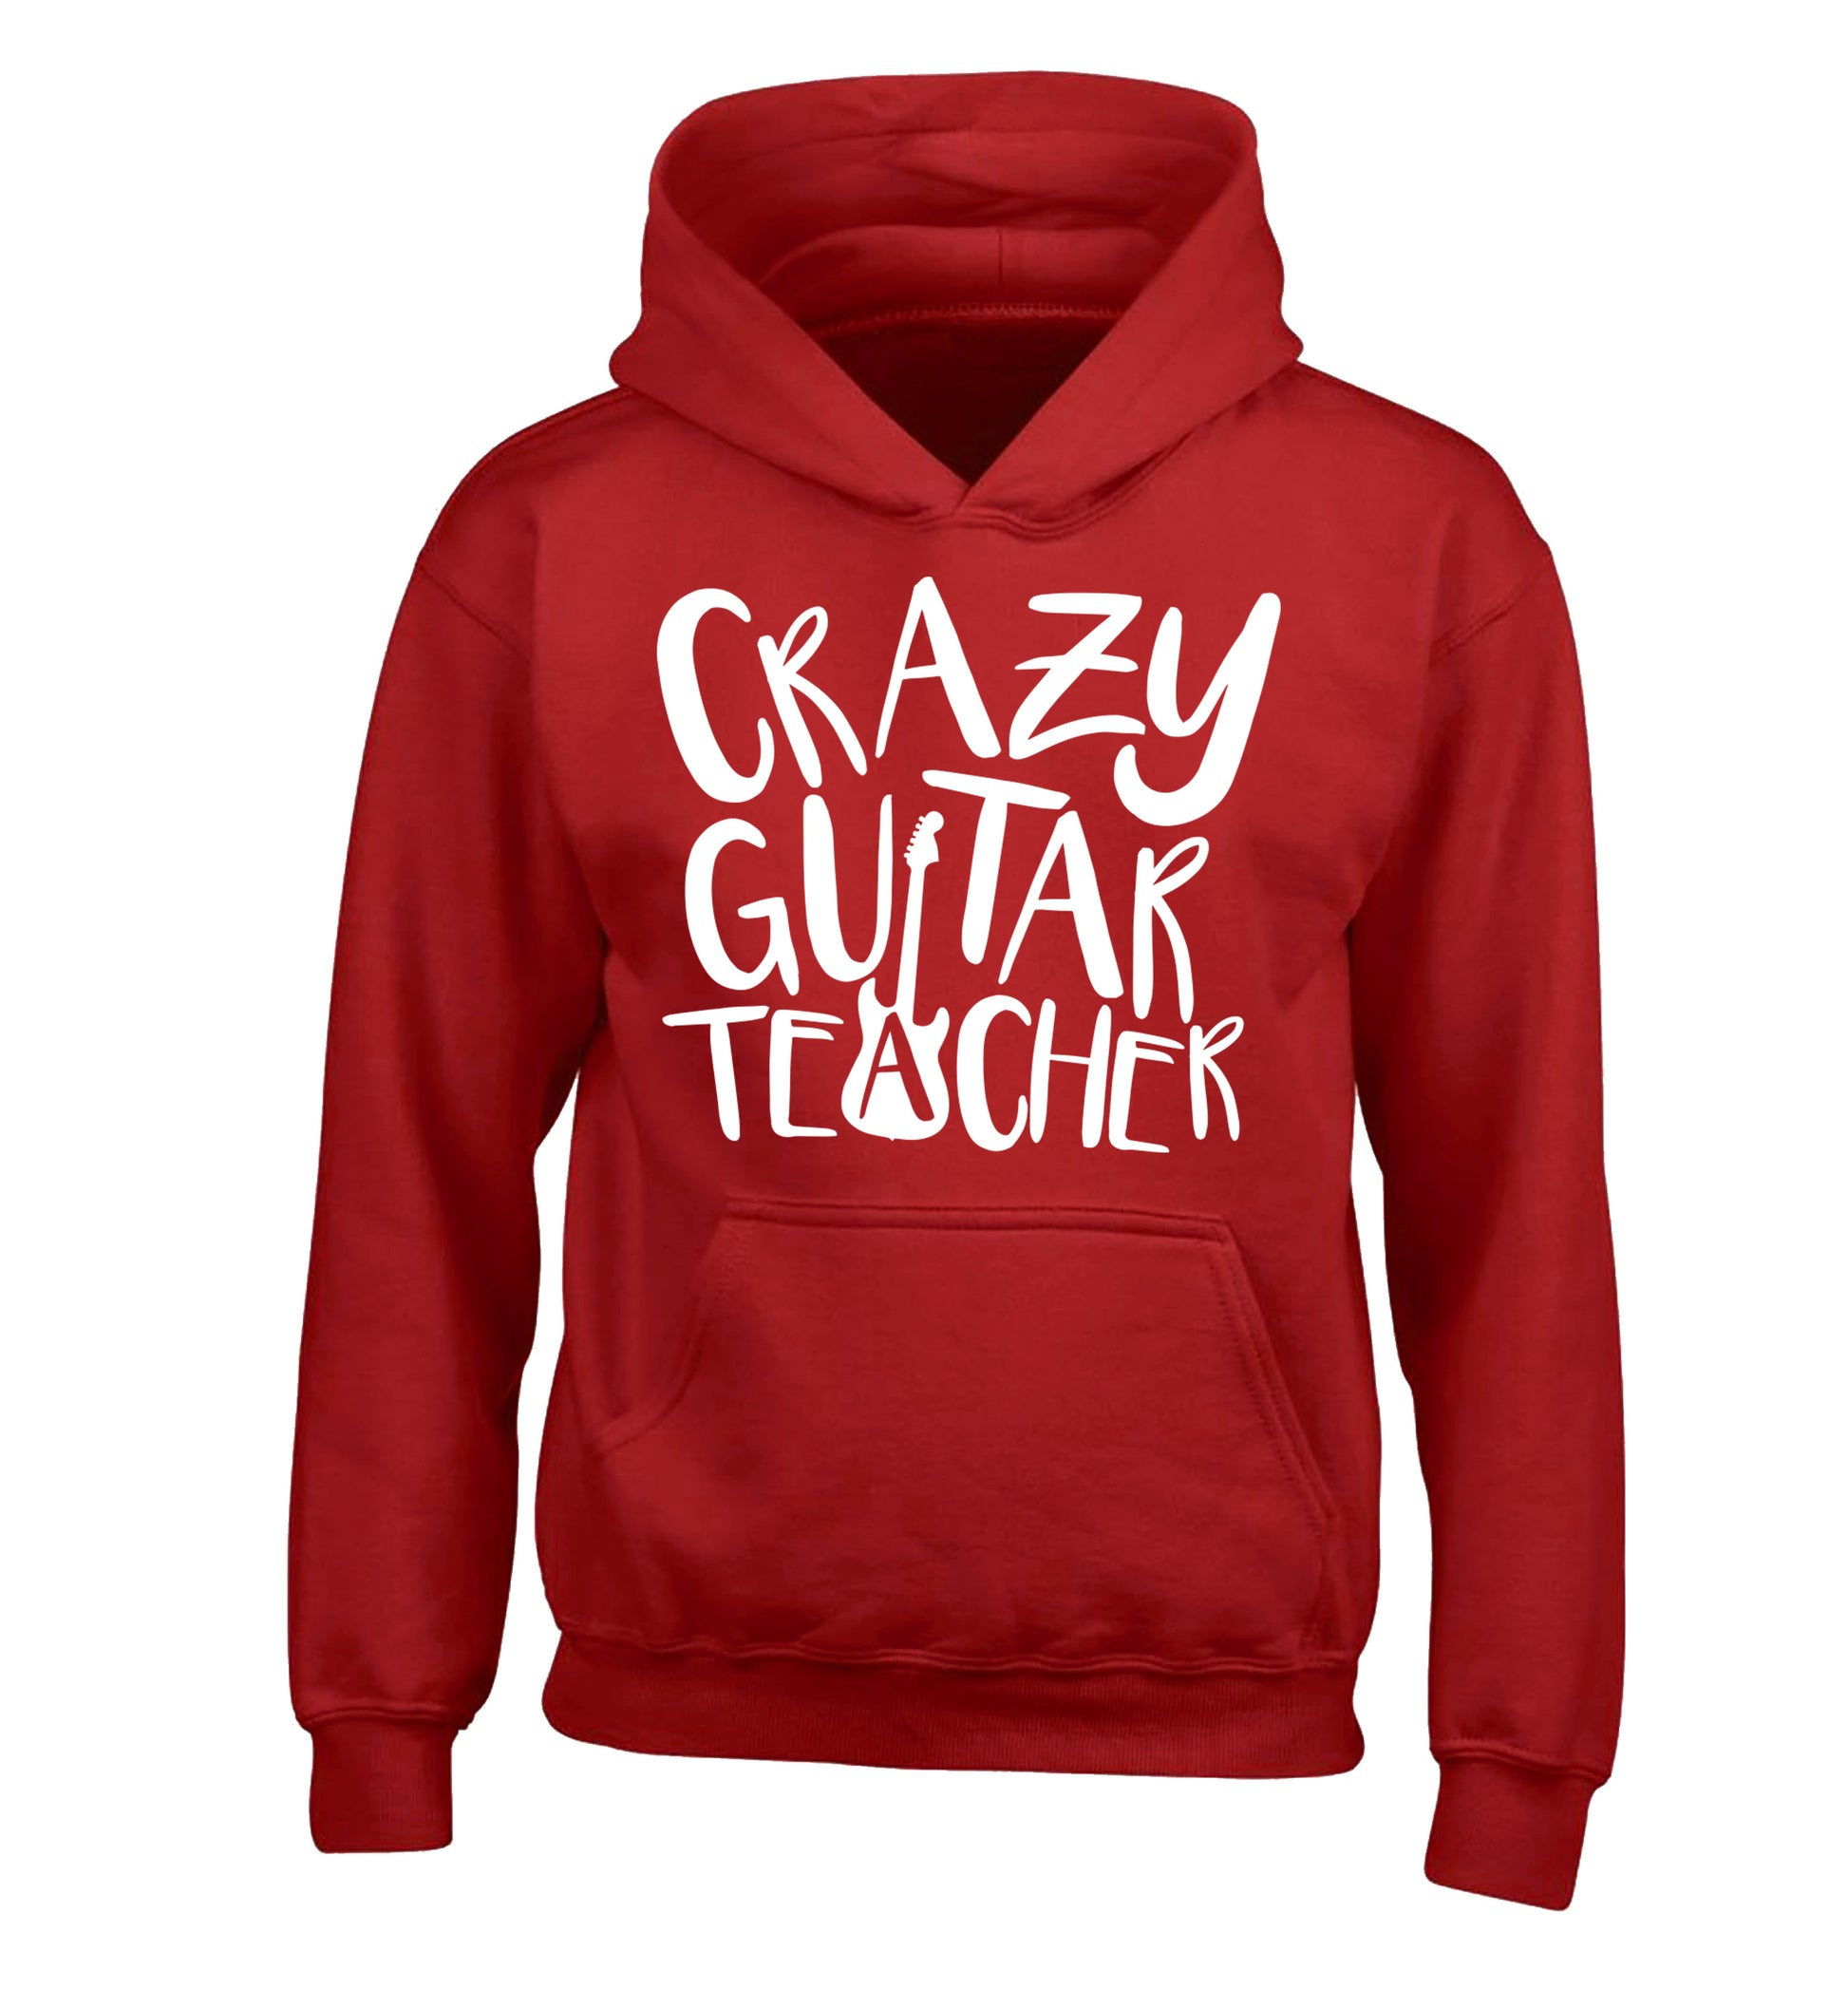 Crazy guitar teacher children's red hoodie 12-13 Years